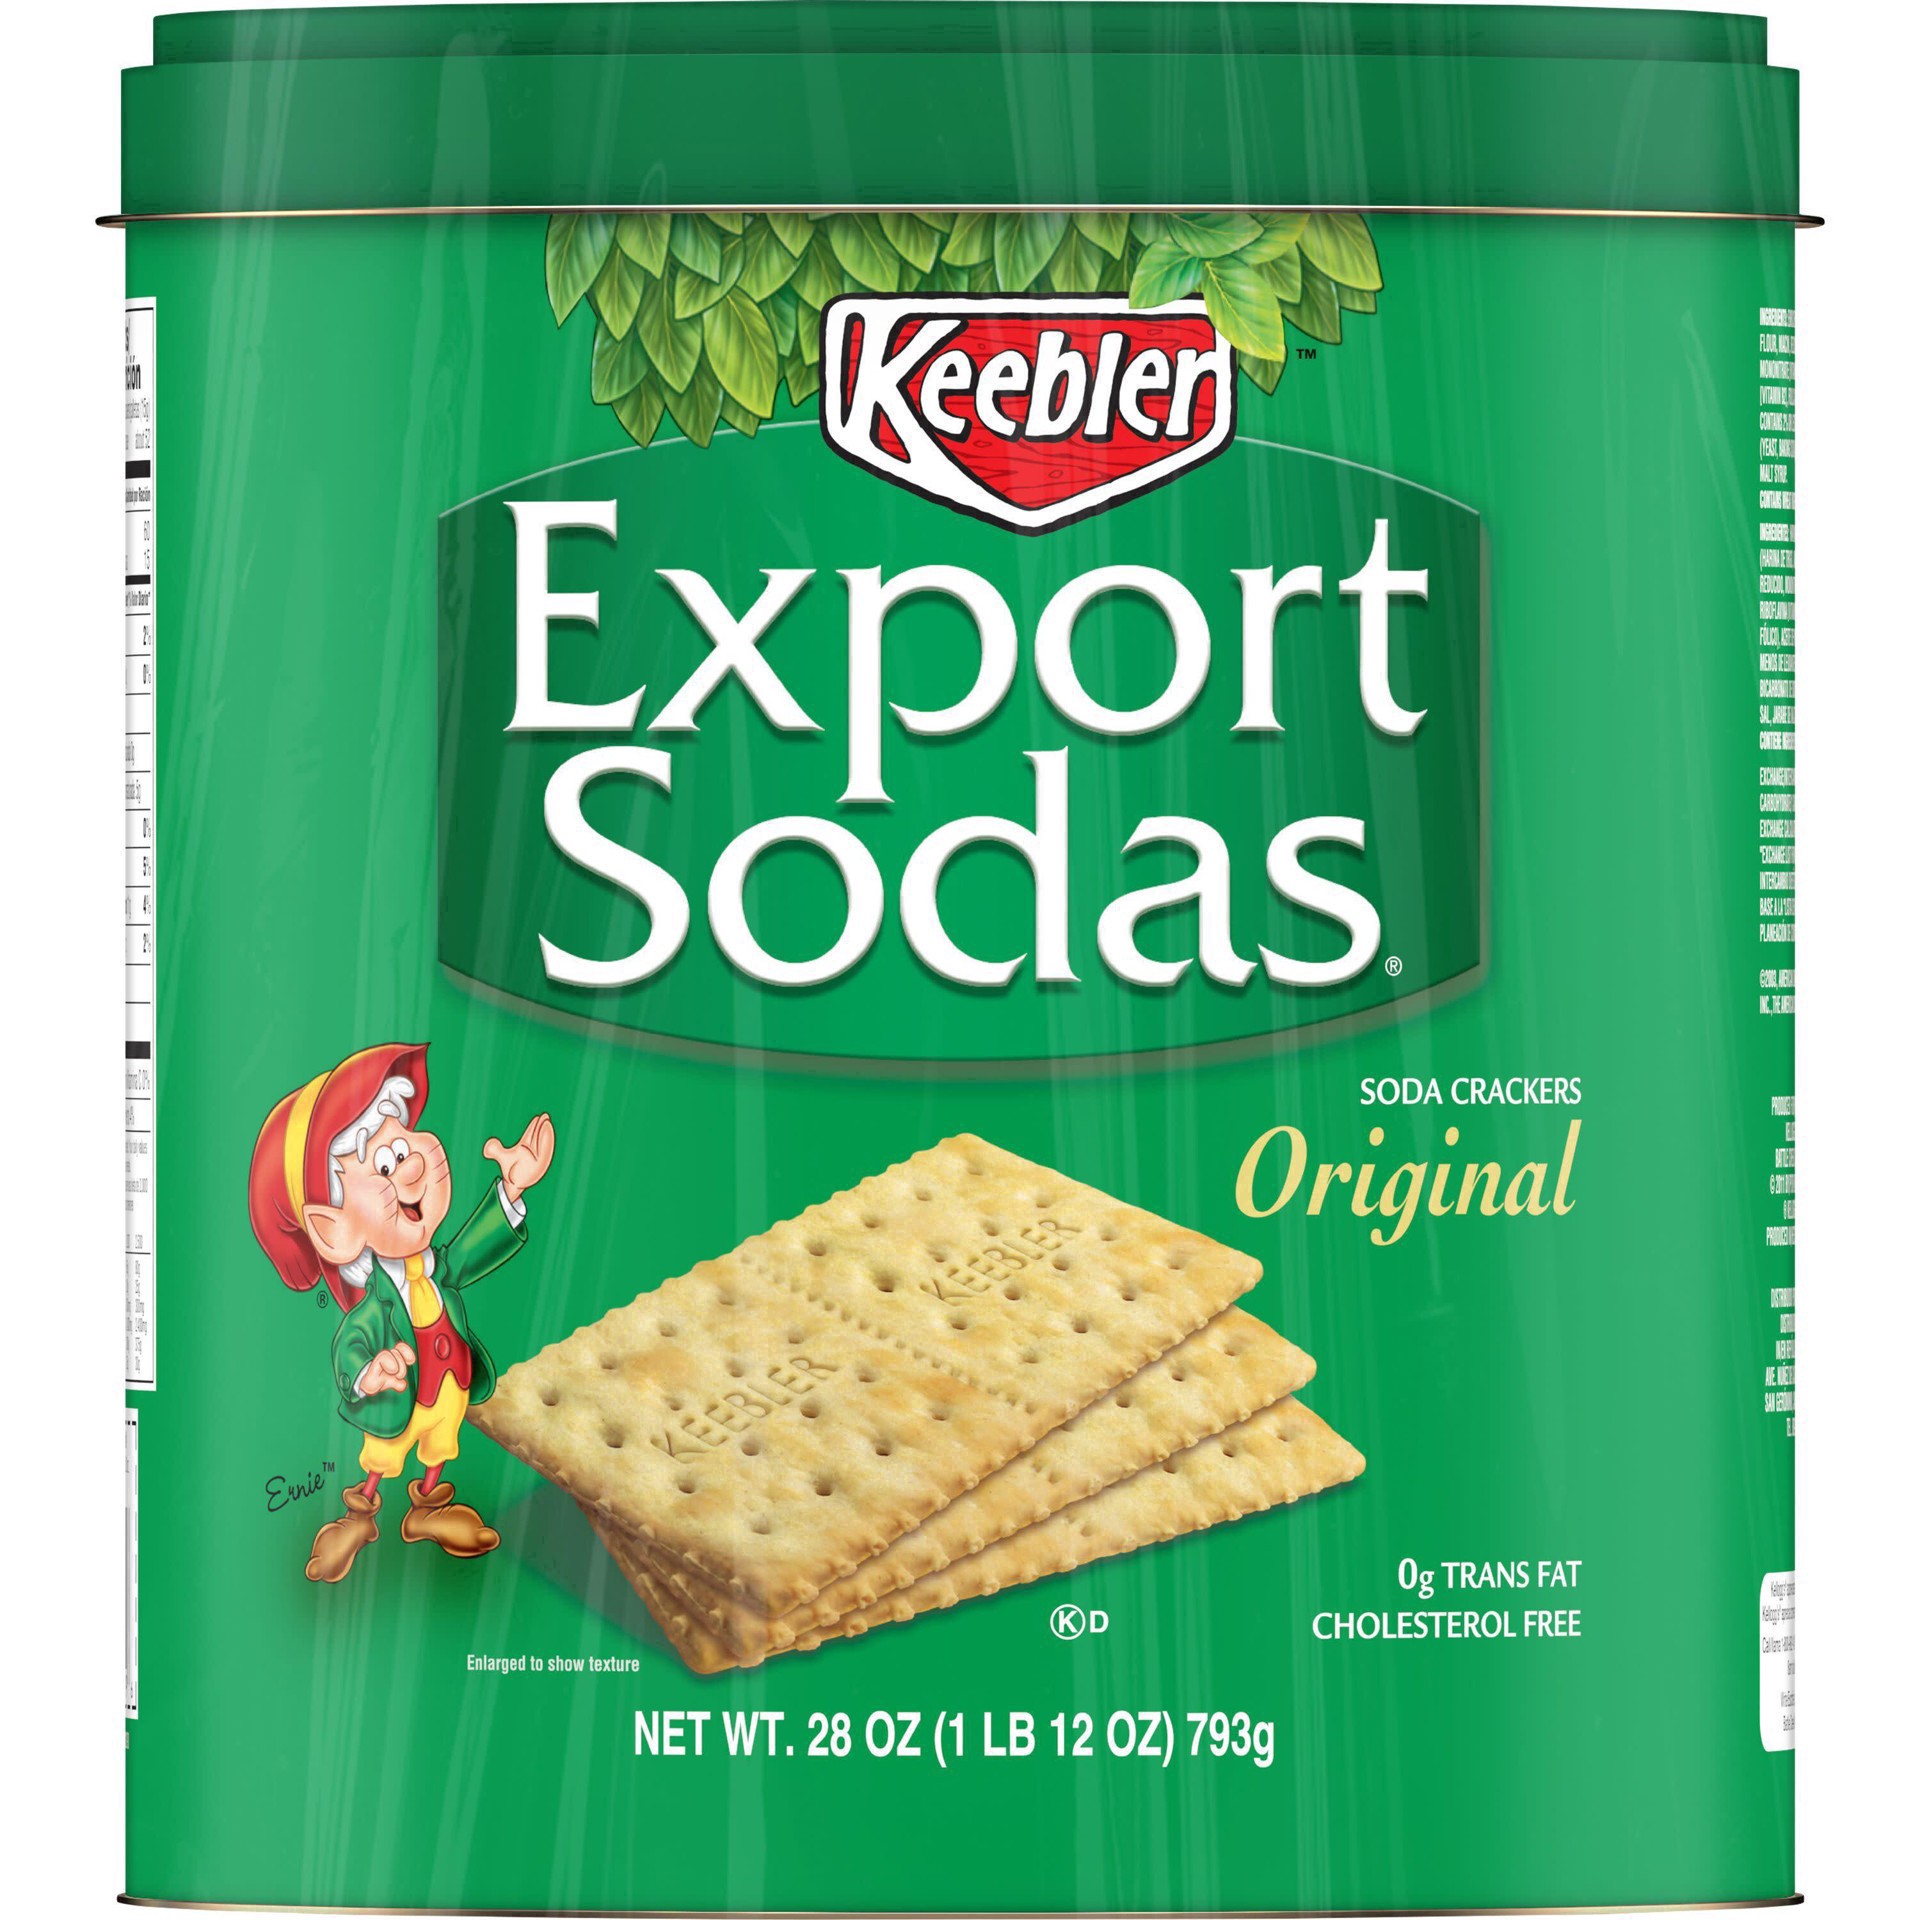 slide 19 of 63, Keebler Export Sodas Soda Crackers, Original, 28 oz, 28 oz